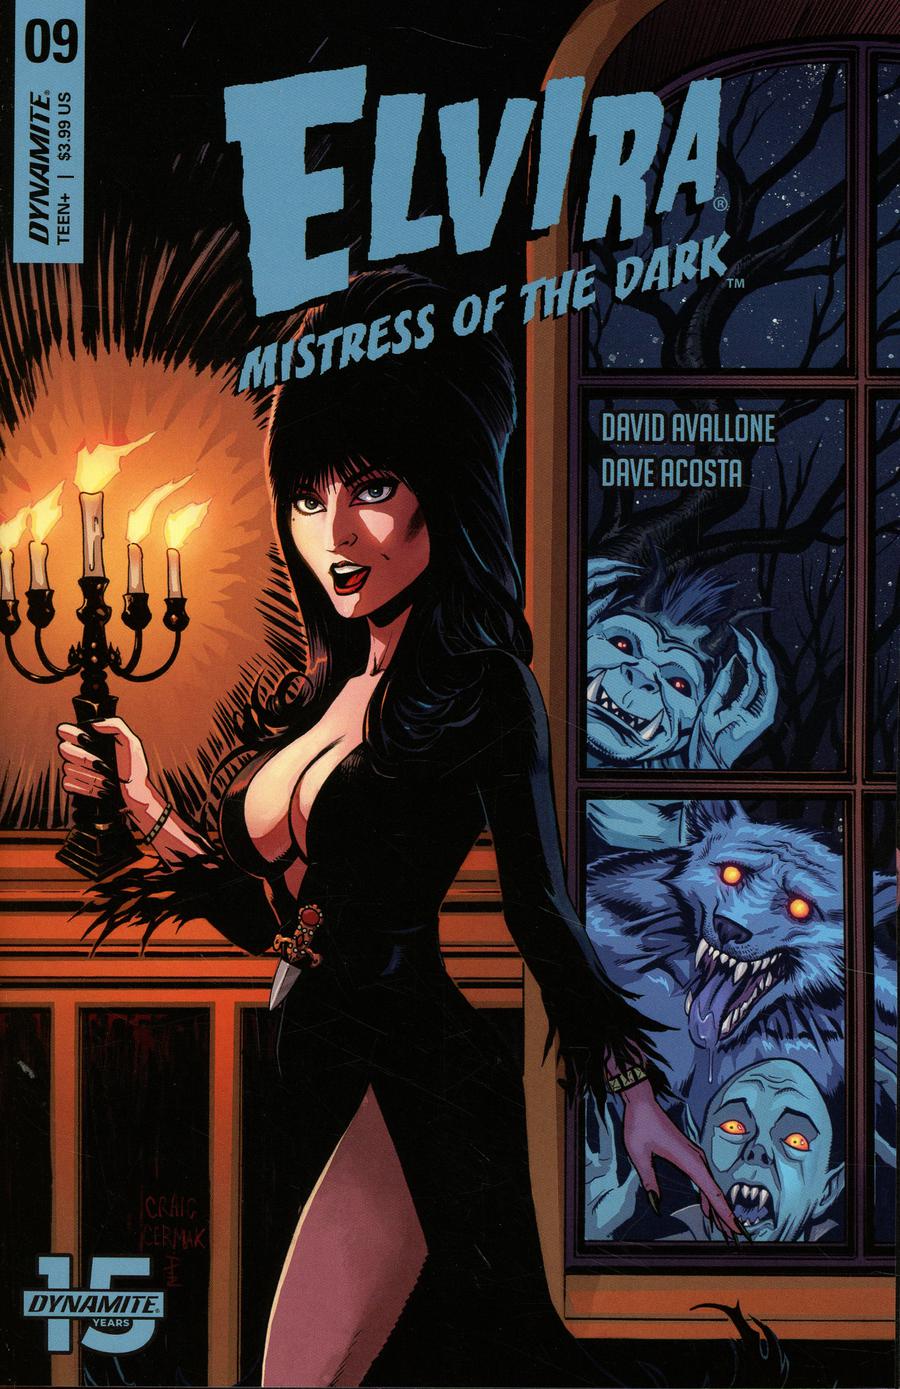 Elvira Mistress Of The Dark Vol 2 #9 Cover B Variant Craig Cermak Cover